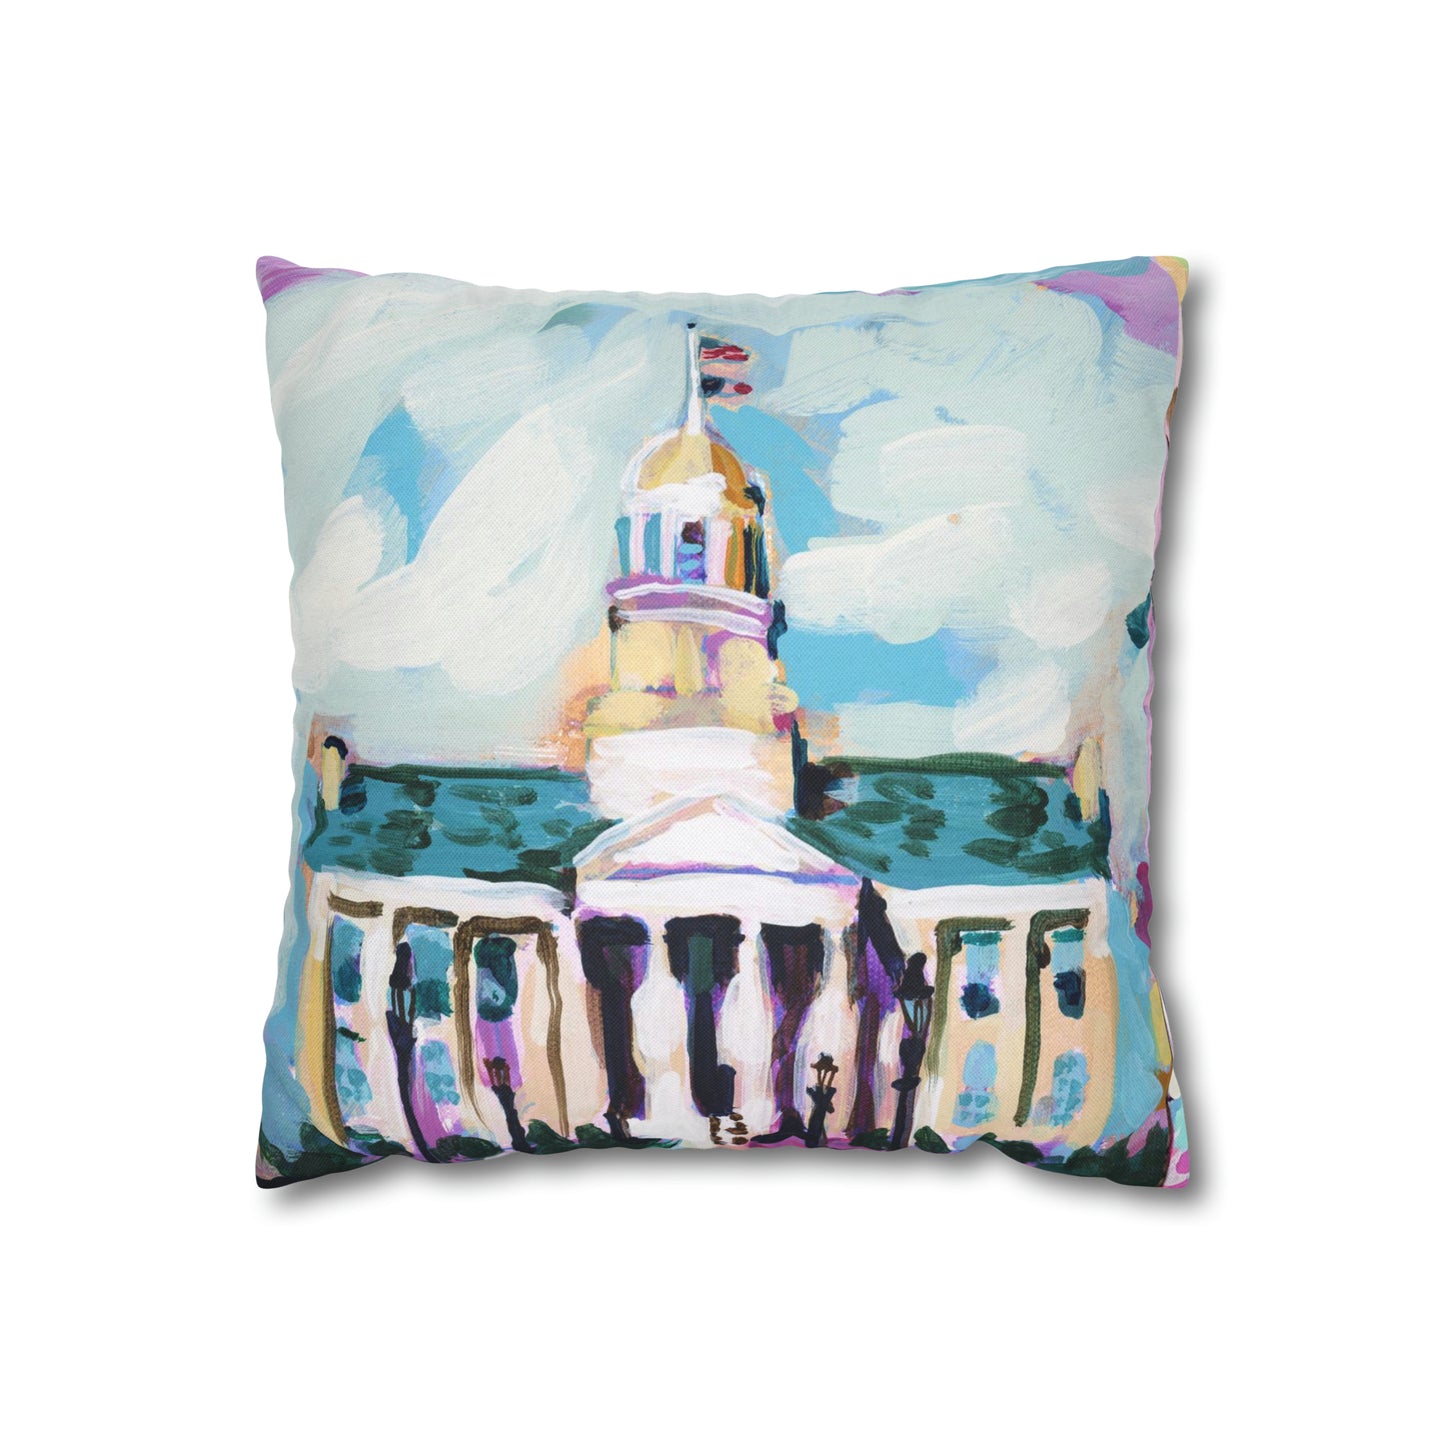 Iowa Capitol/Washington Fountain double sided pillow cover